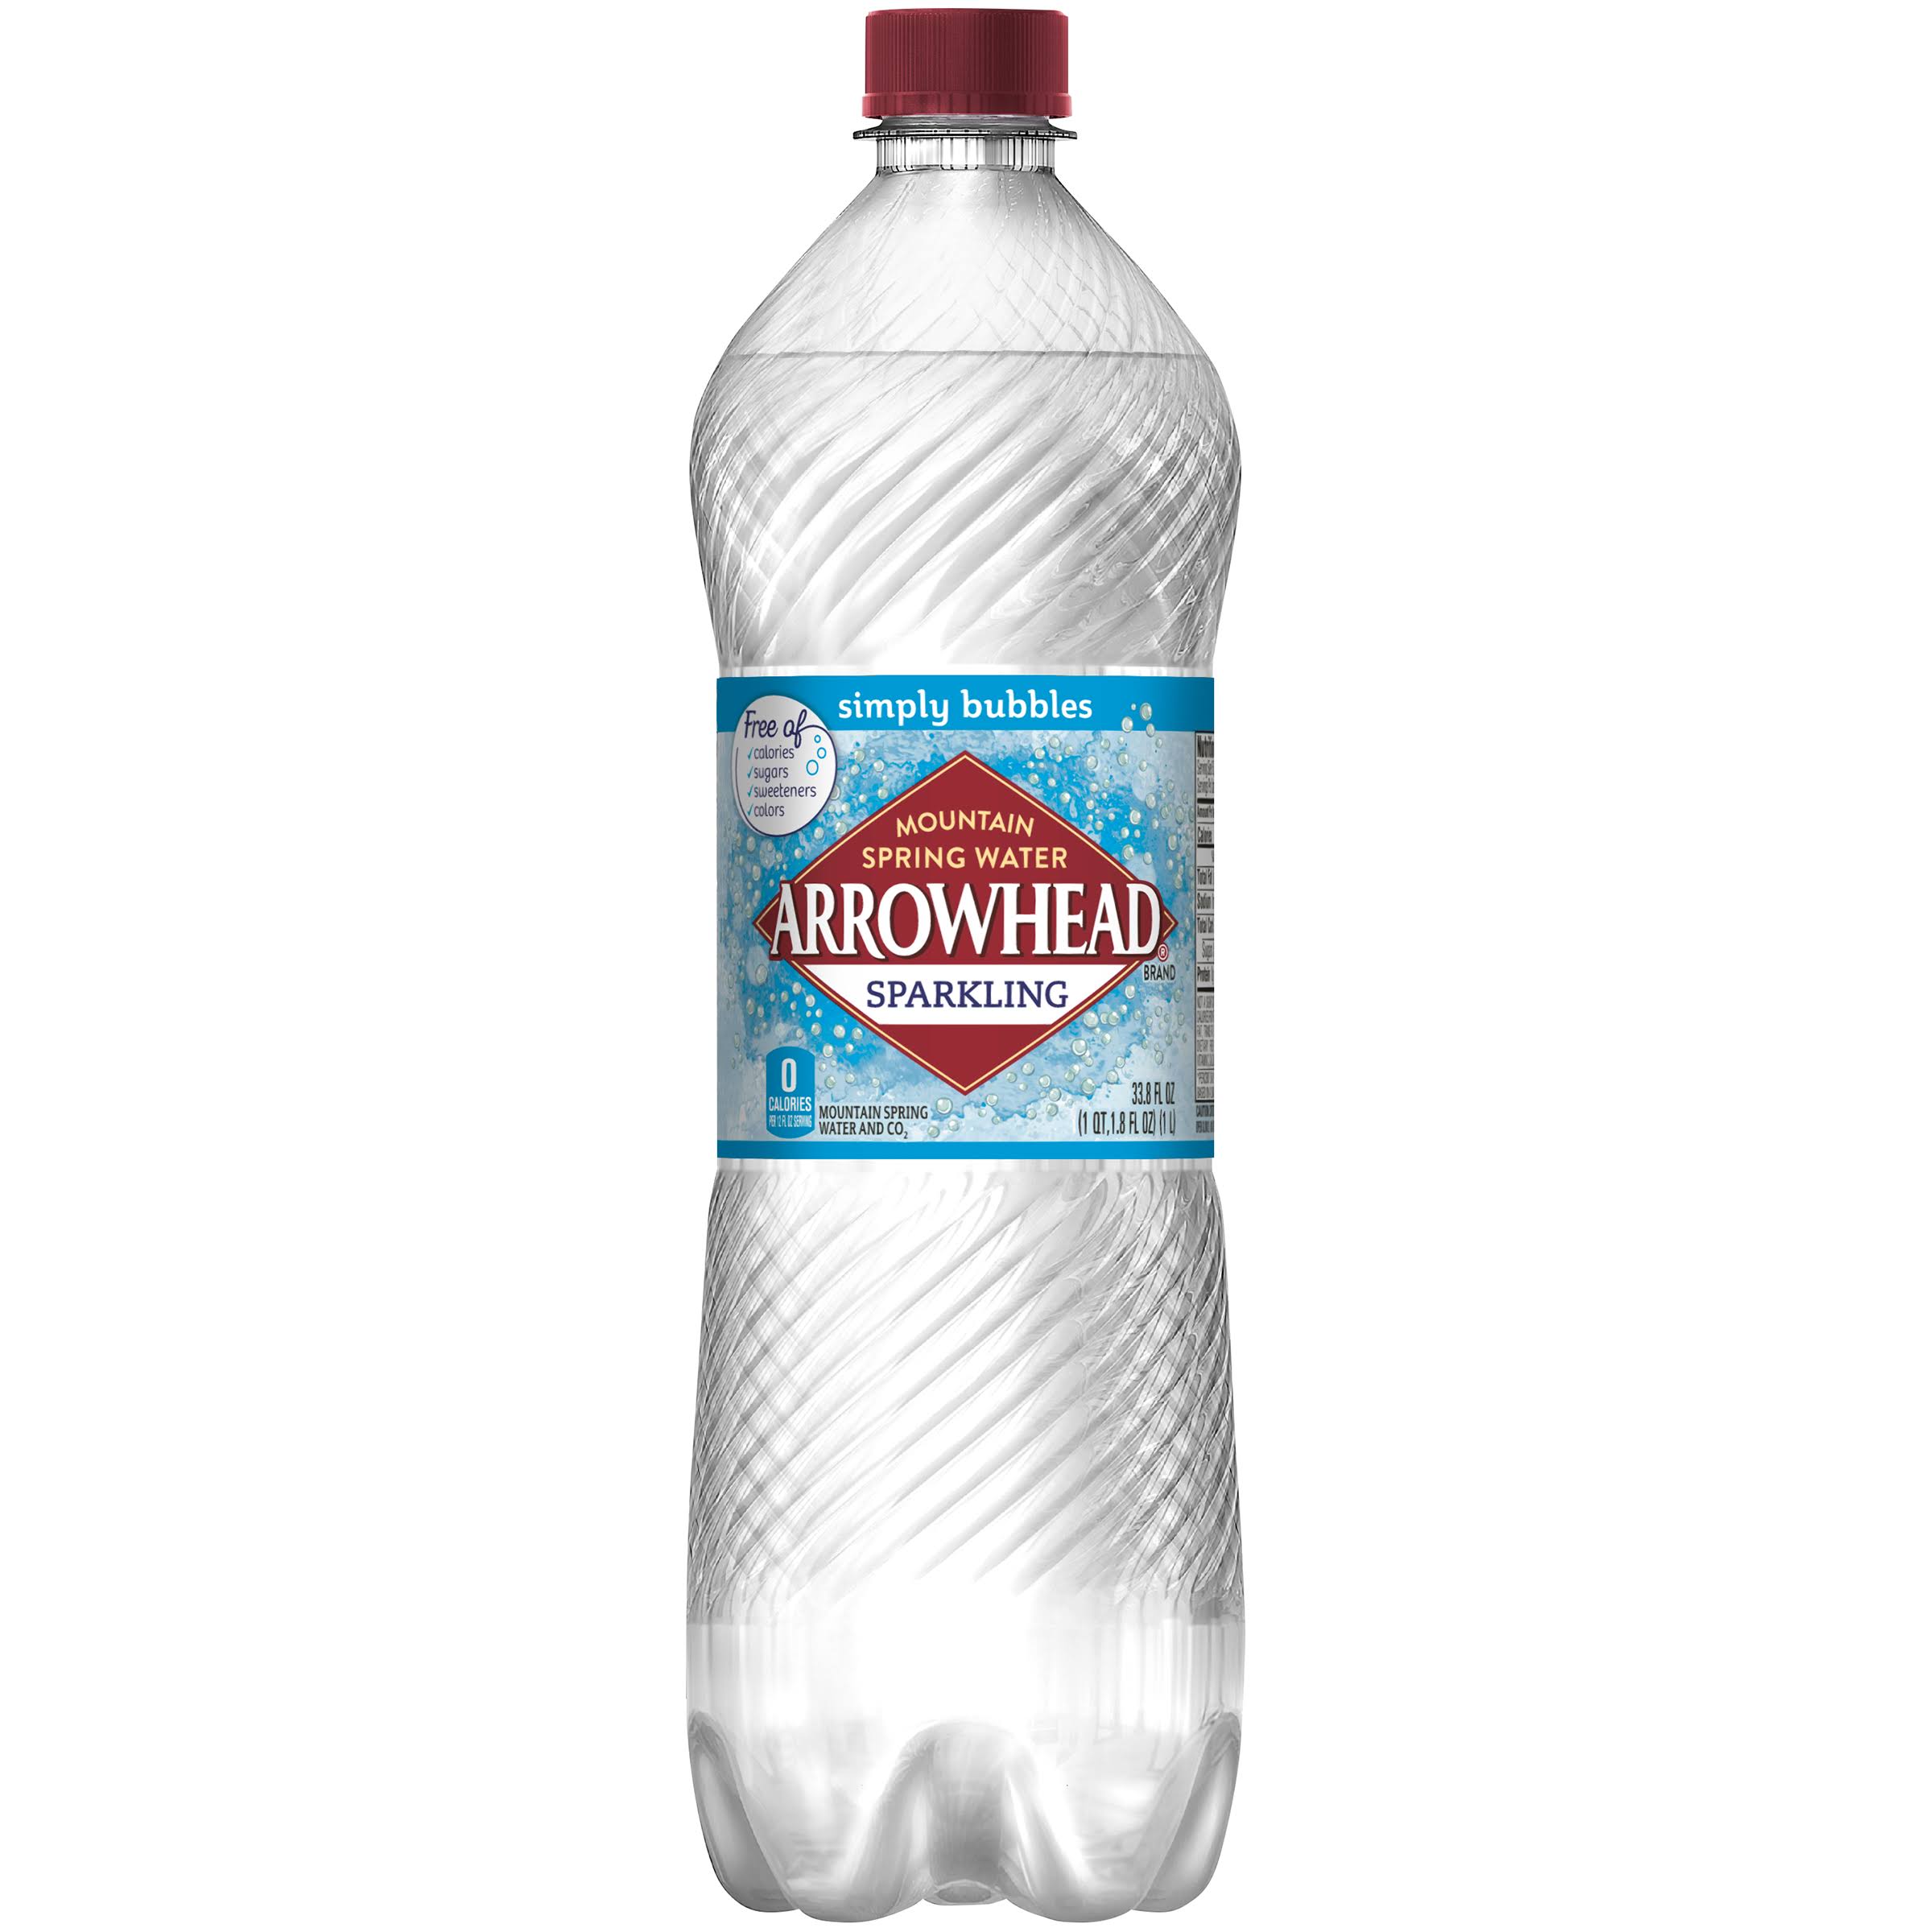 ArrowHead Original Sparkling Mountain Spring Water - 33.8fl oz